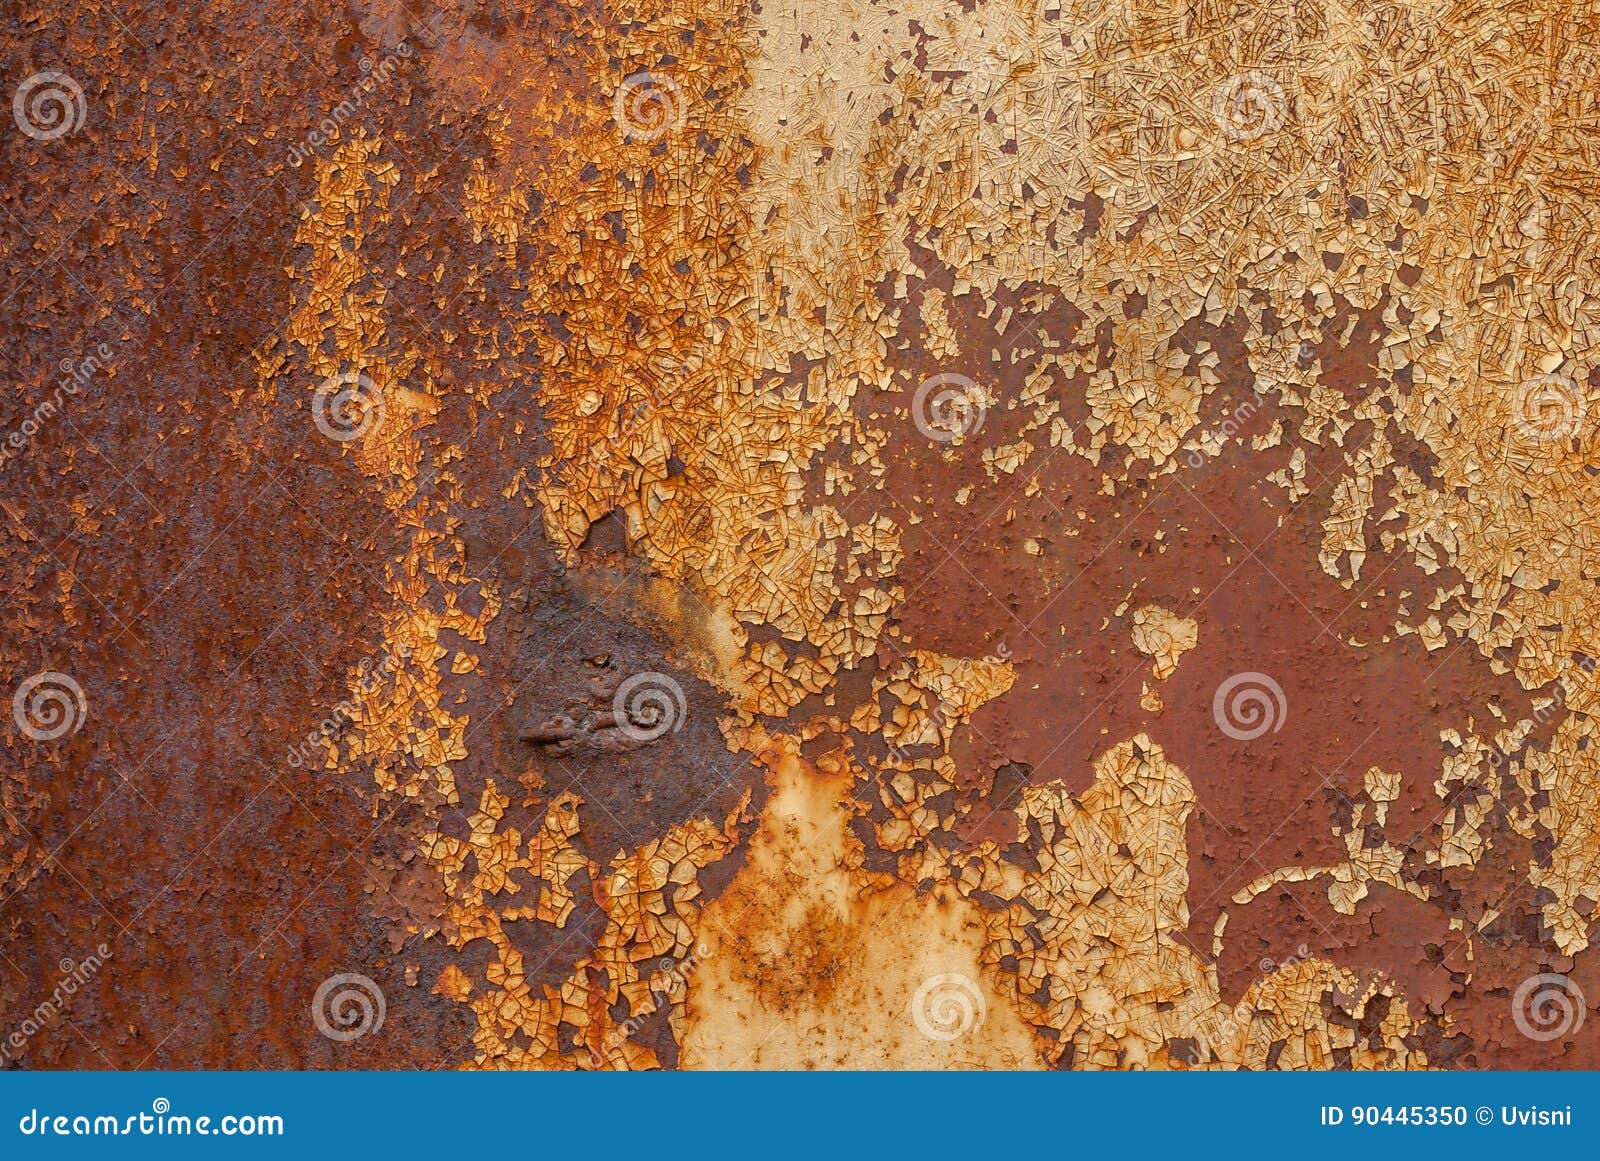 Can sheet metal rust фото 14